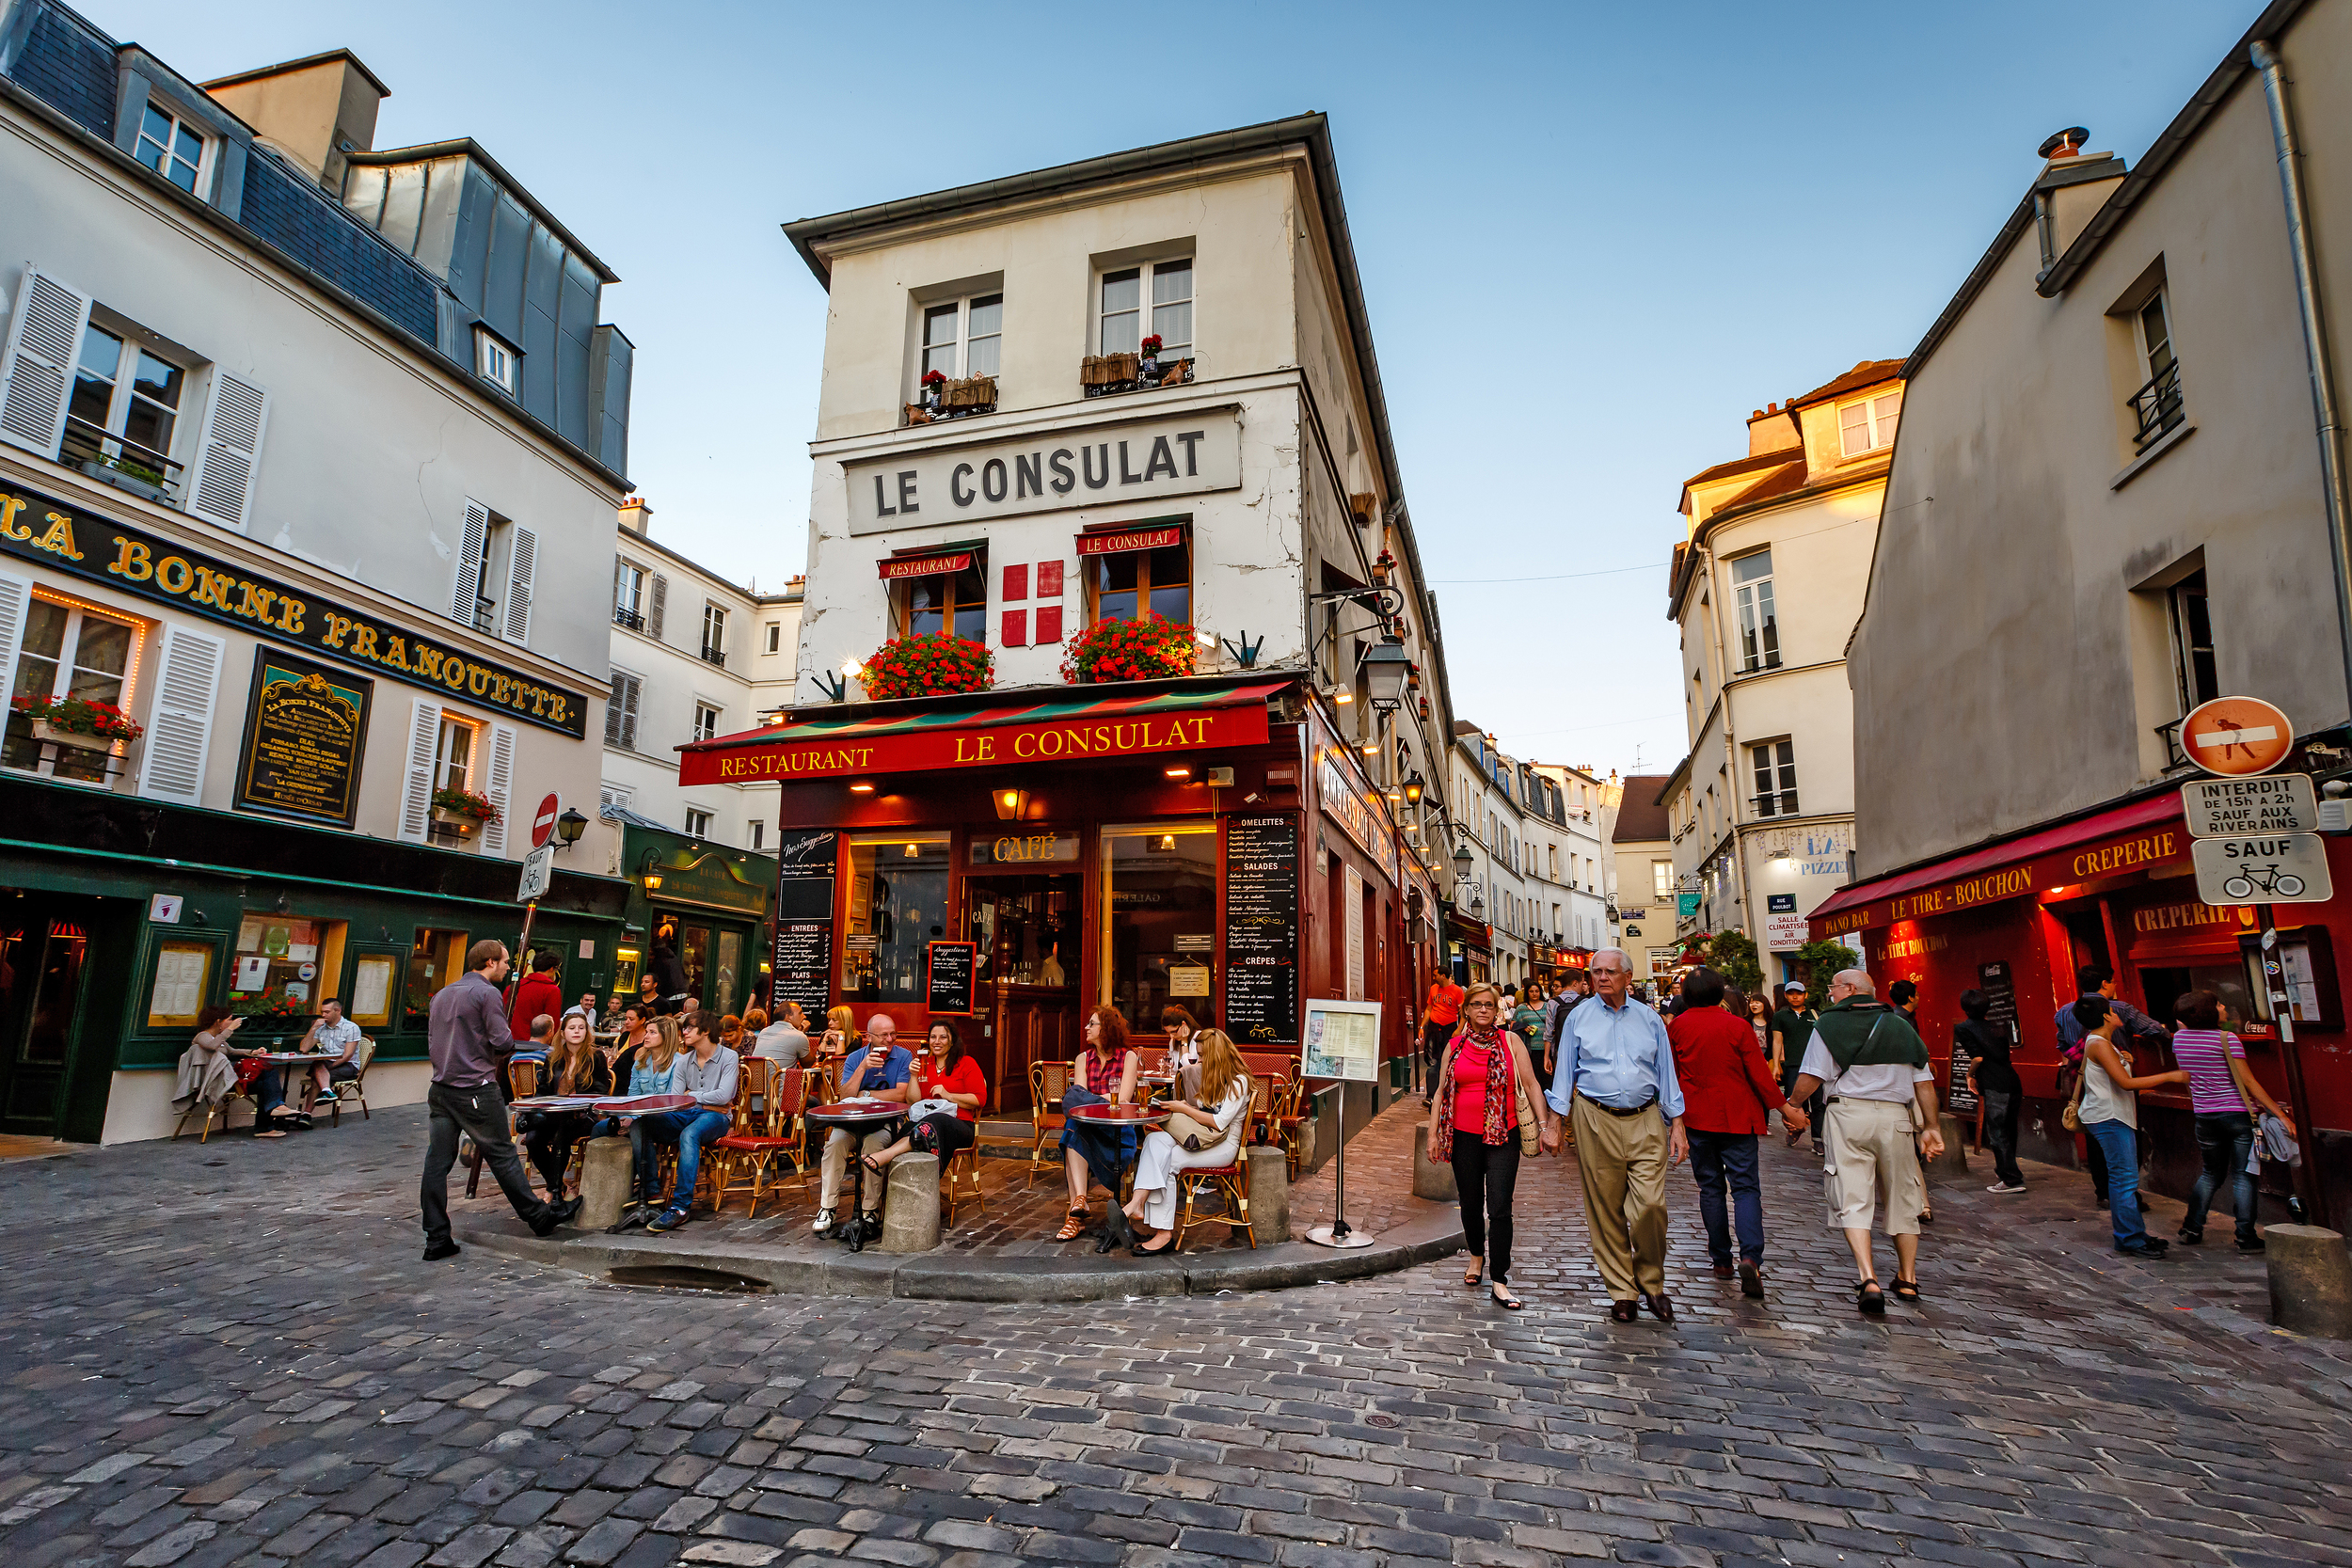 A local street in Paris full of restaurants